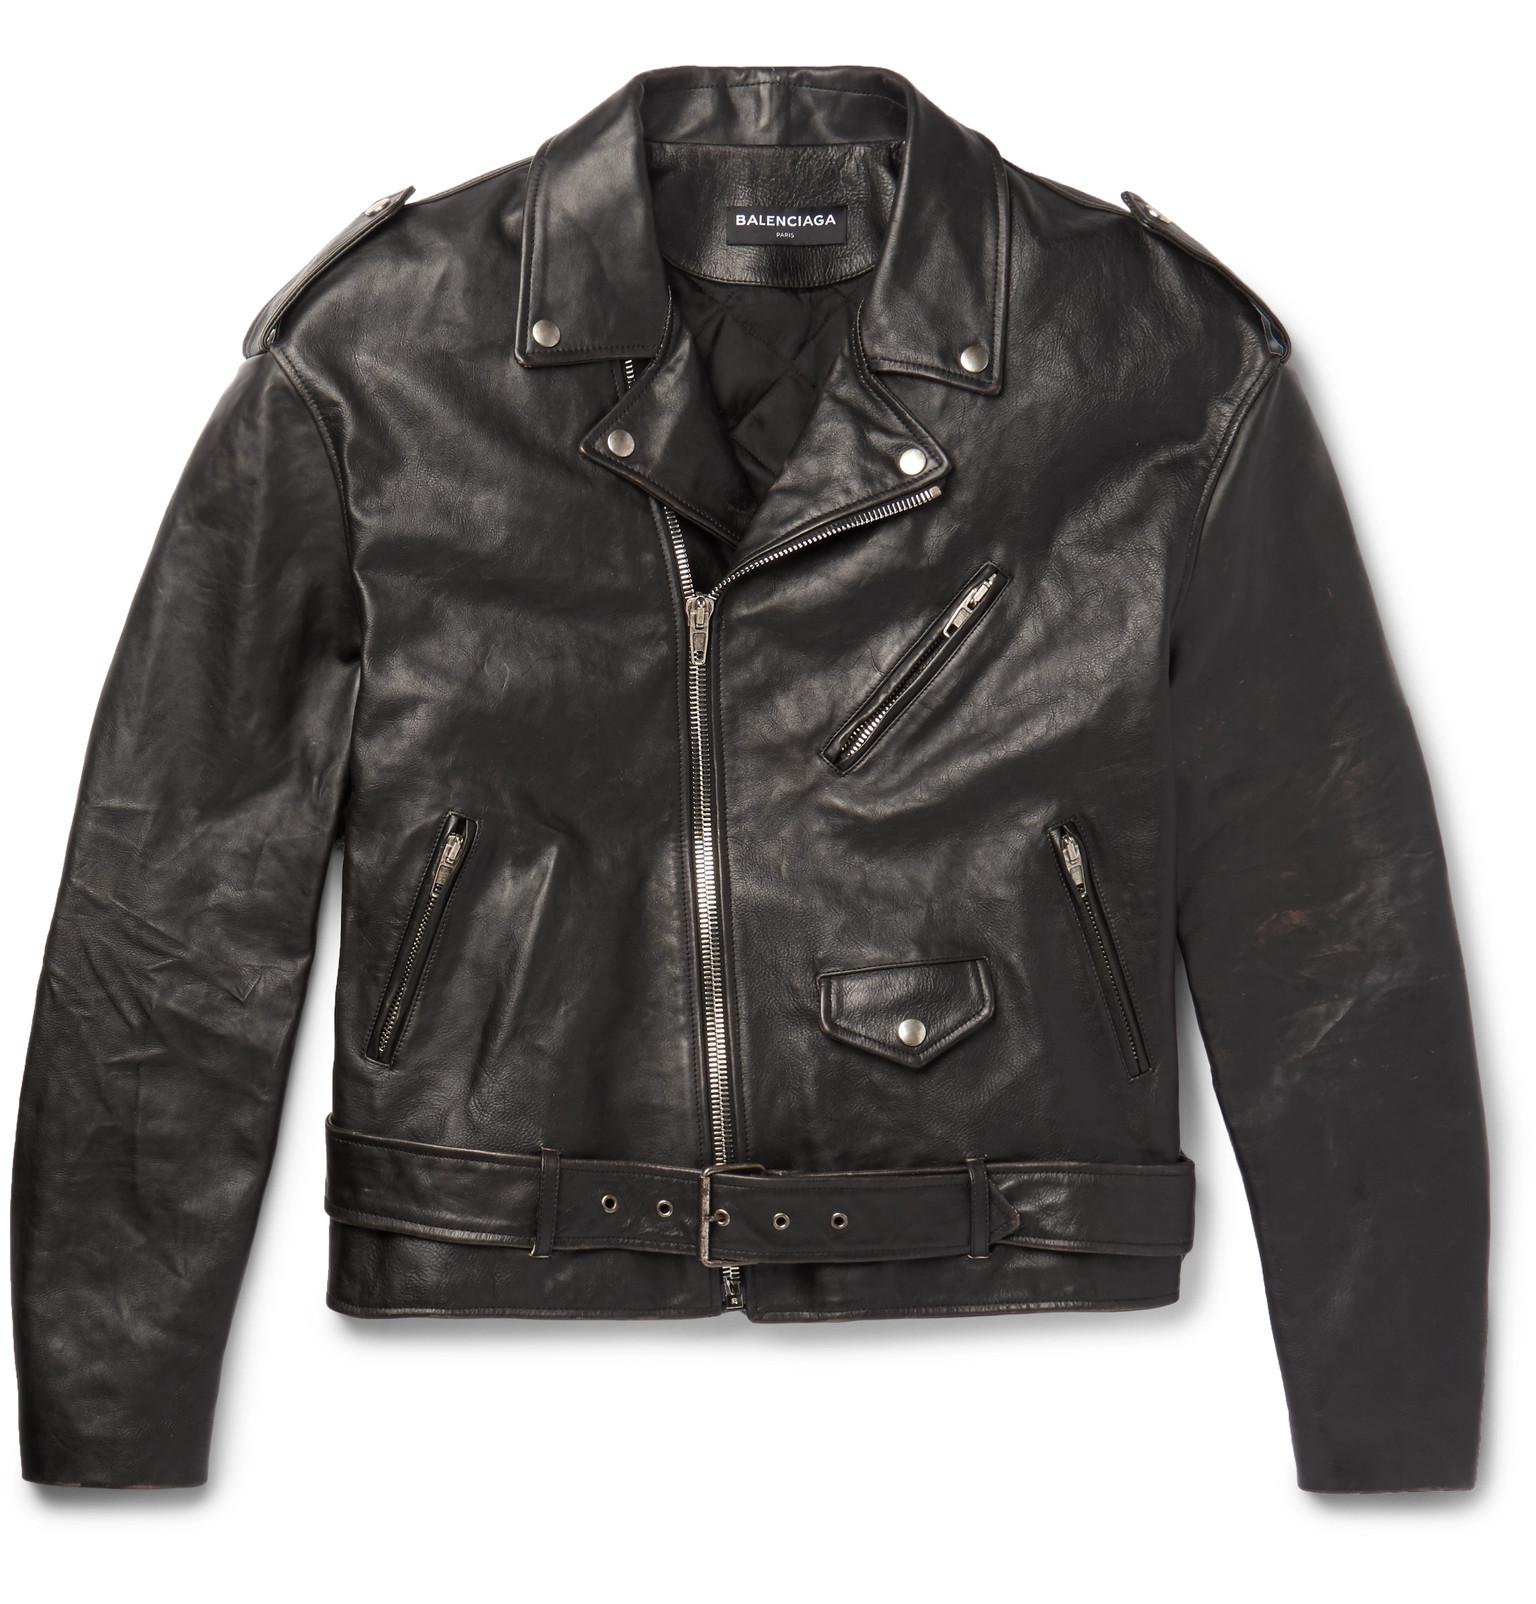 Balenciaga Oversized Printed Leather Biker Jacket in Black for Men - Lyst